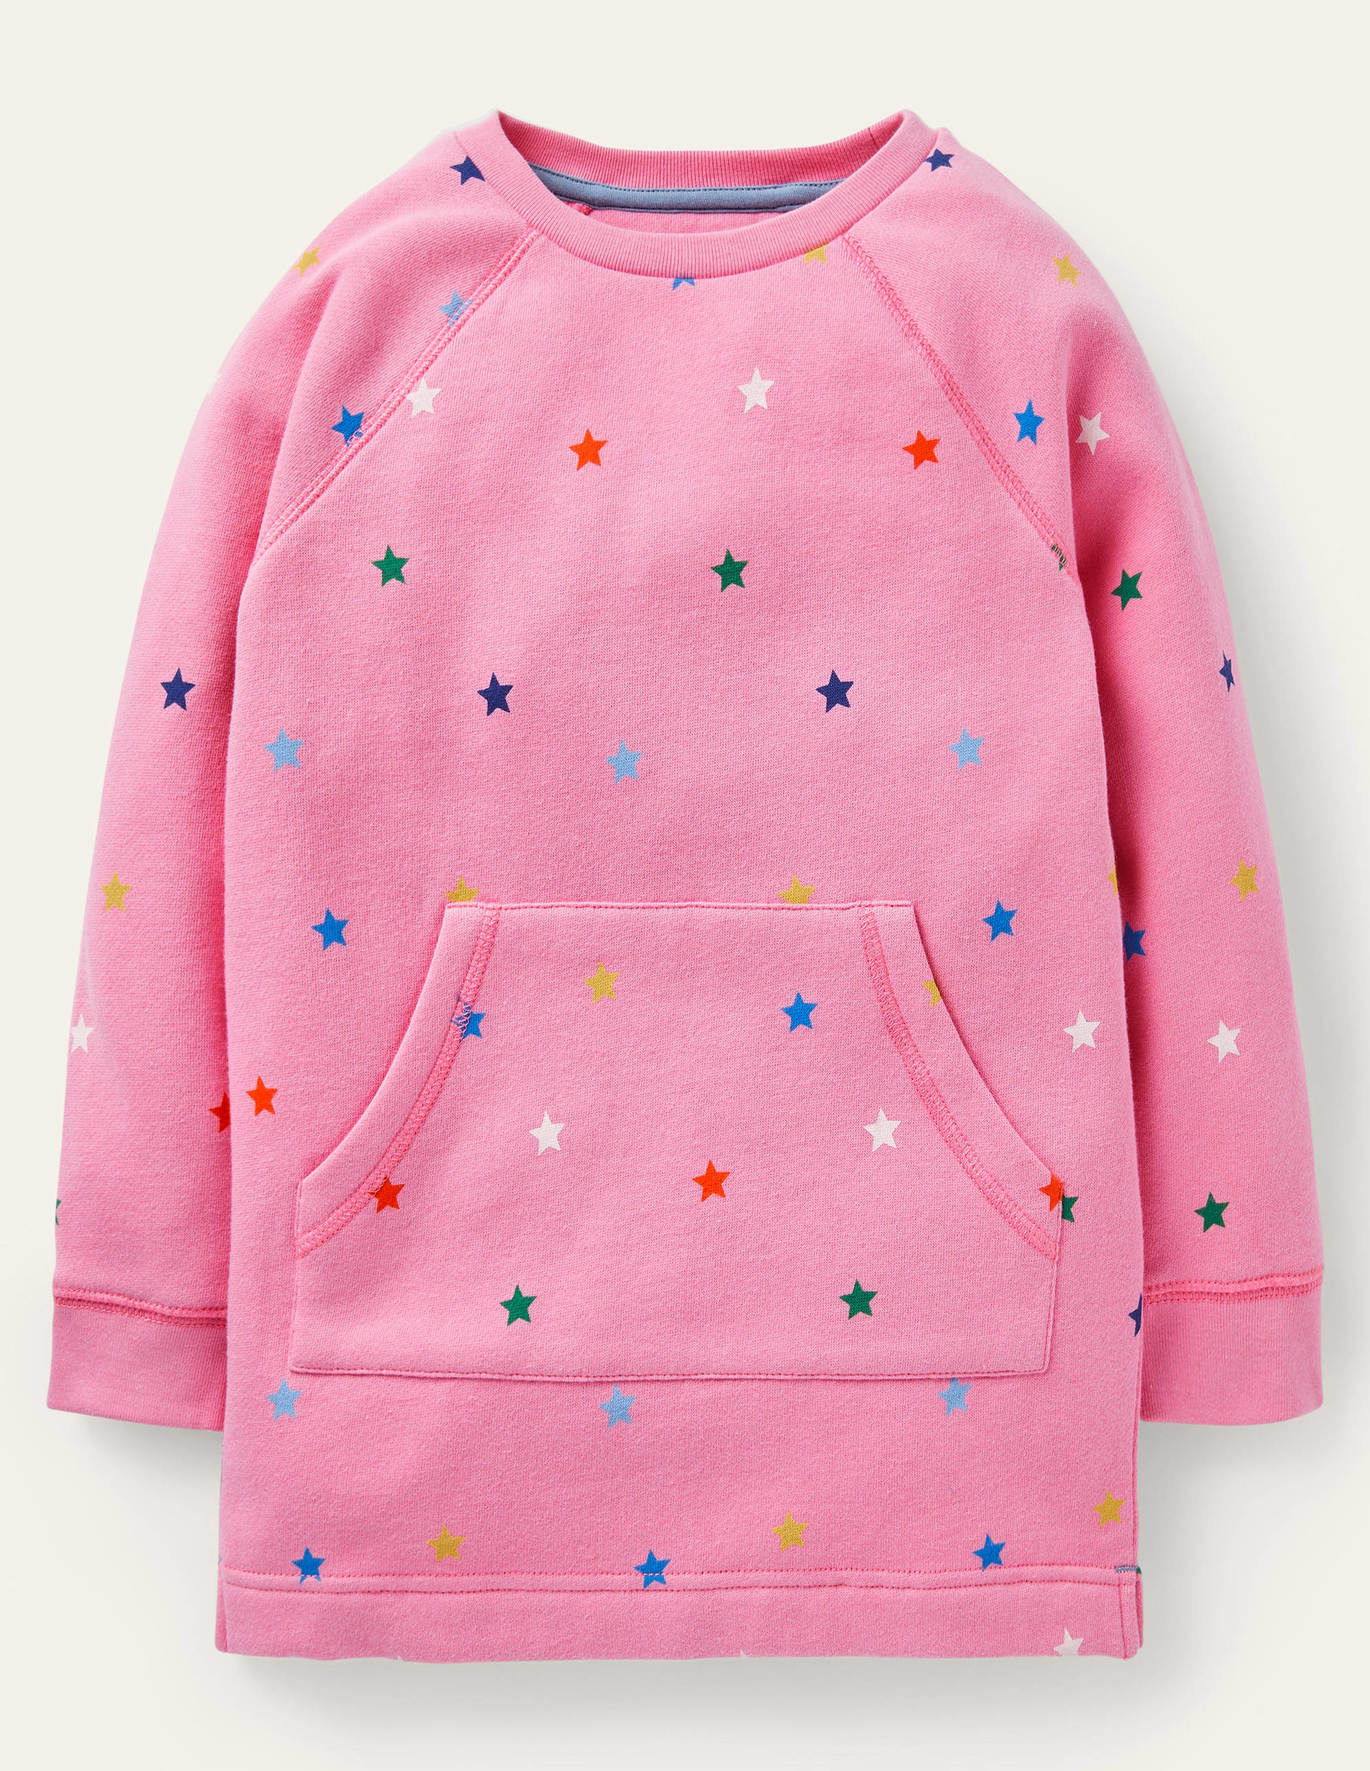 Boden Printed Sweatshirt Tunic - Bright Petal Pink Stars